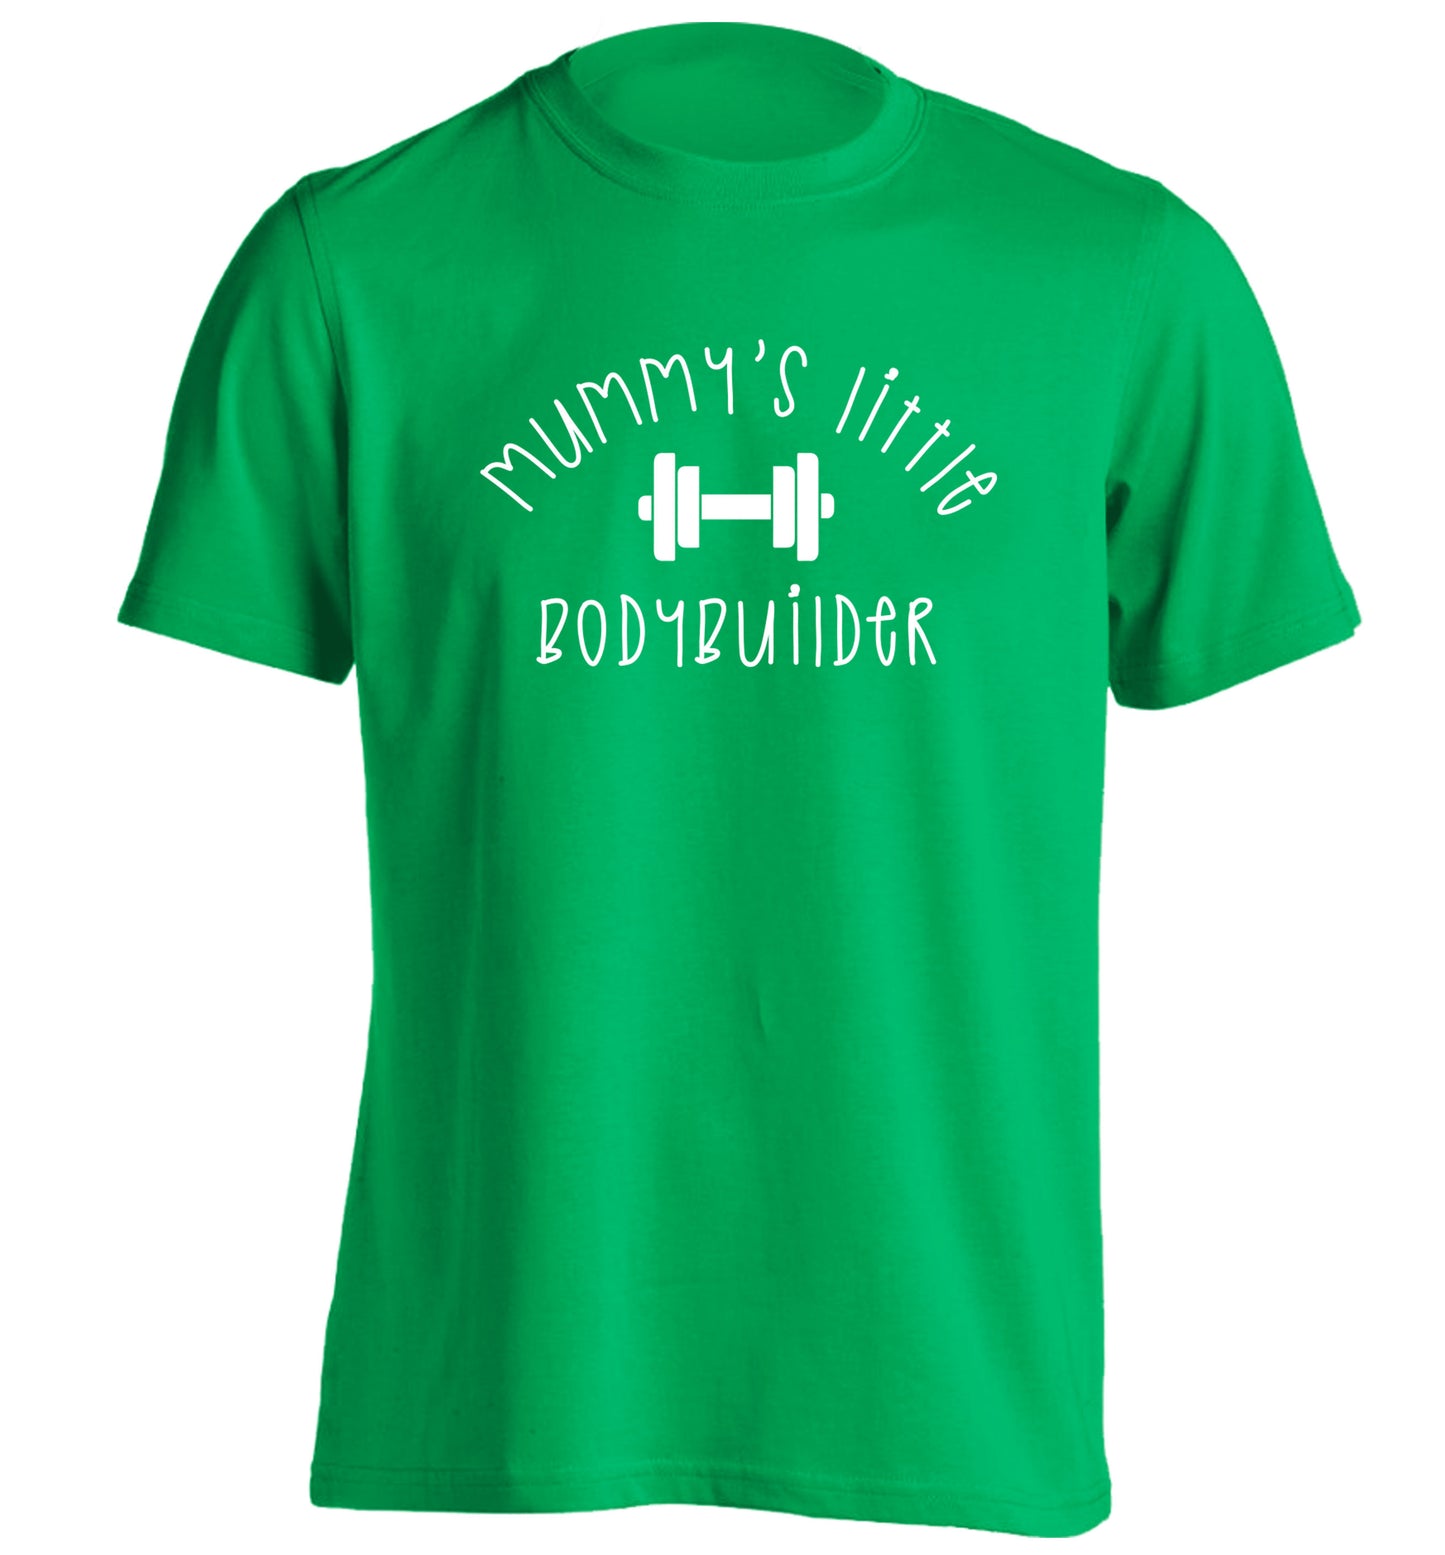 Mummy's little bodybuilder adults unisex green Tshirt 2XL